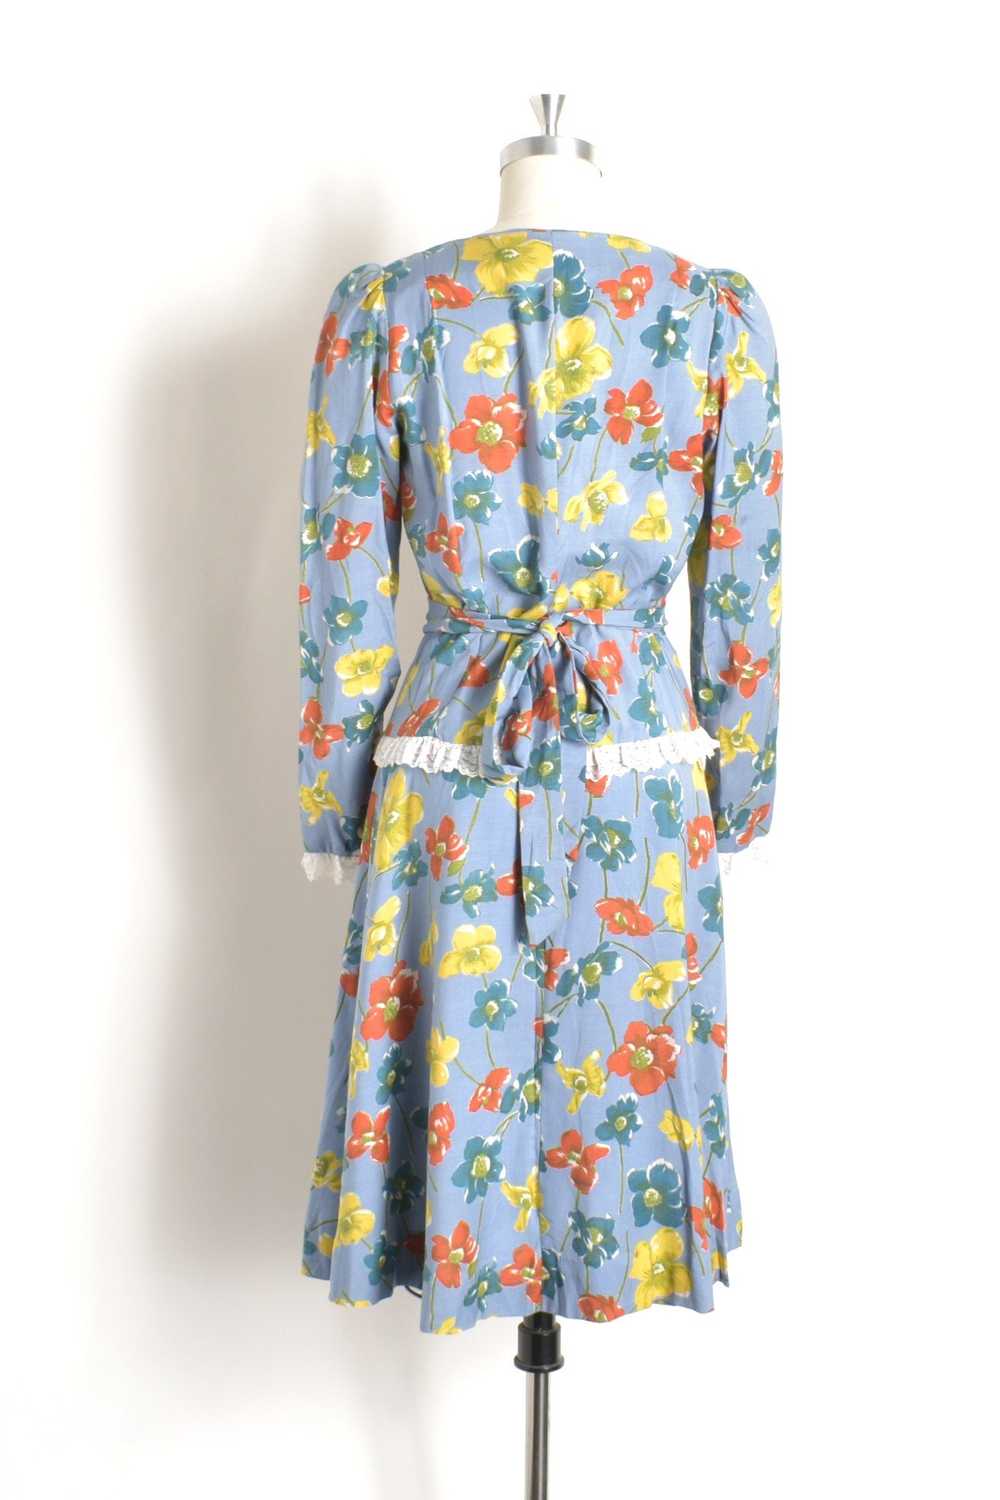 1970s Floral Button Up Dress-medium - image 5